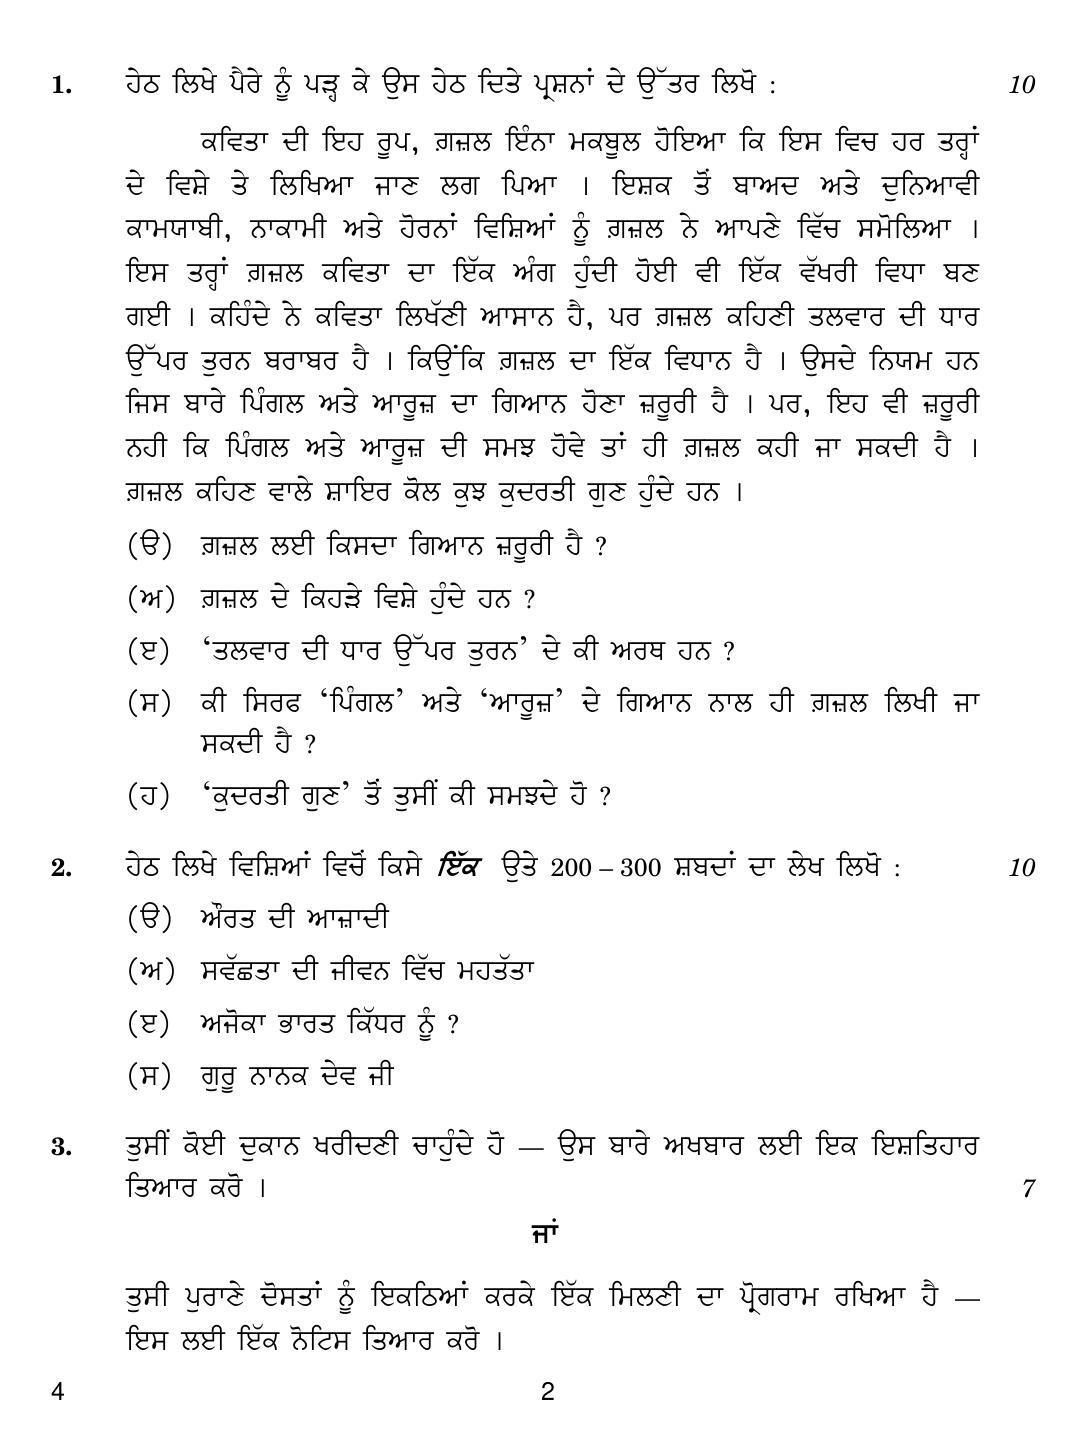 CBSE Class 12 4 Punjabi 2019 Compartment Question Paper - Page 2